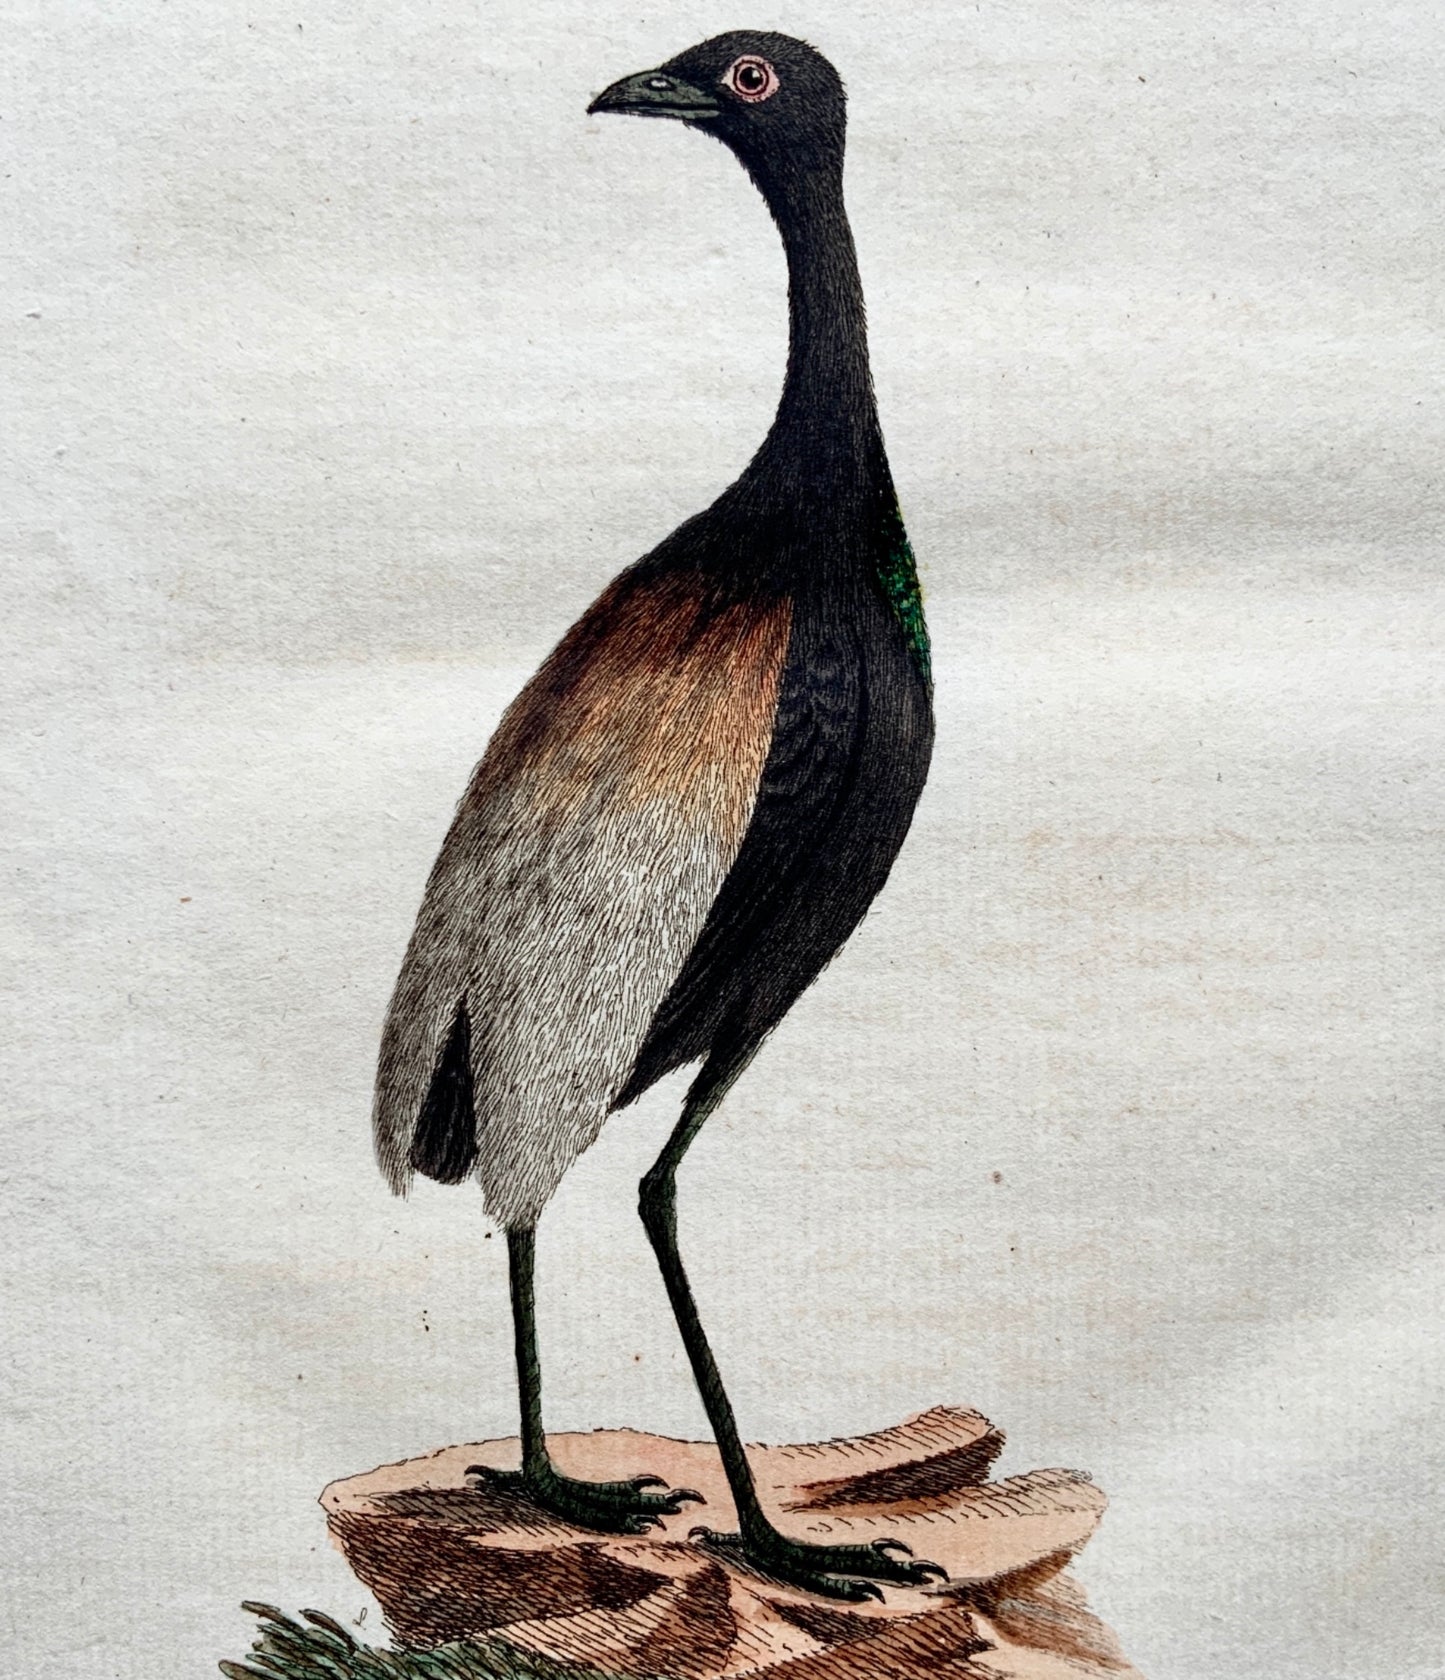 1785 John Latham - Synopsis - GOLD BREASTED TRUMPETER Ornithology - hand coloured